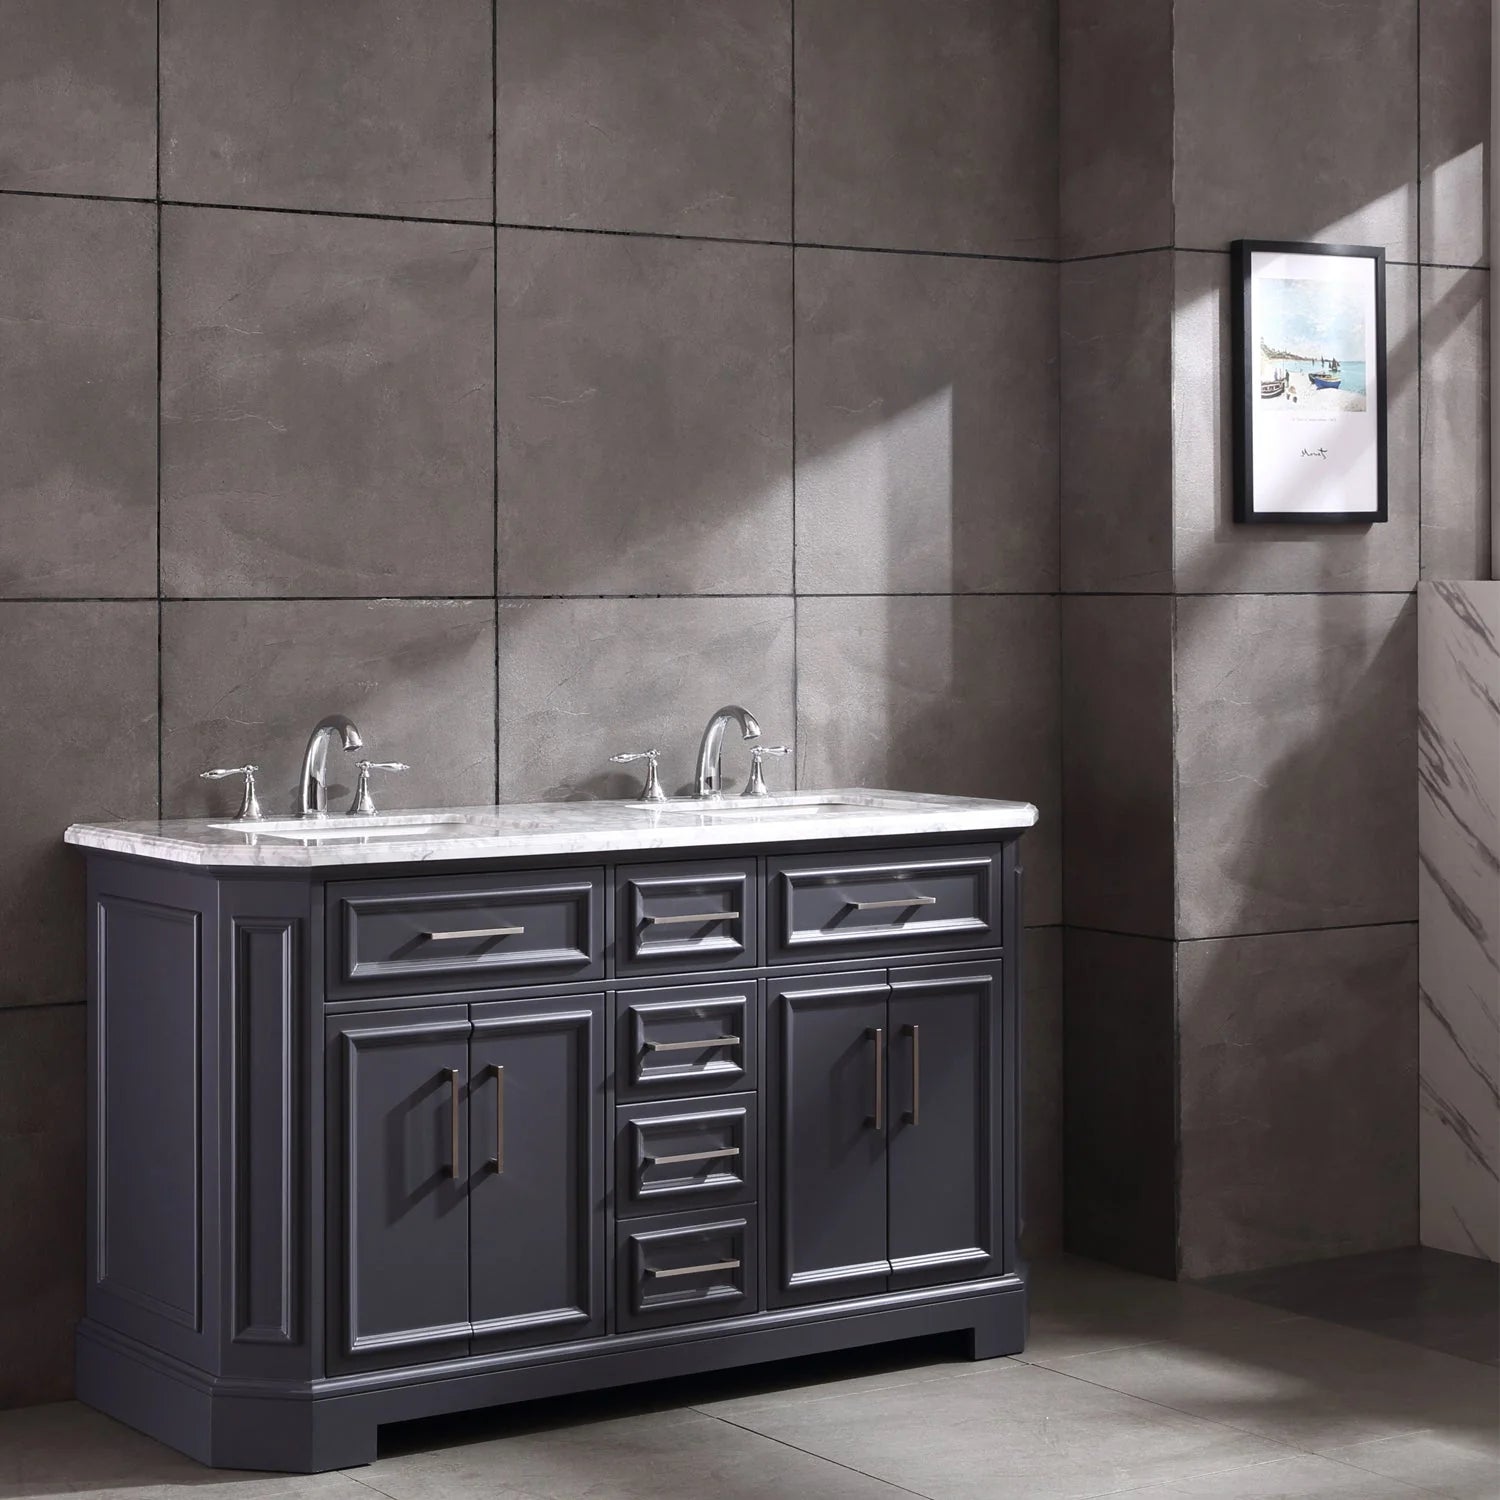 Eviva Glory Bathroom Vanity with Carrara Marble Countertop and Porcelain Sink - Bathroom Design Center